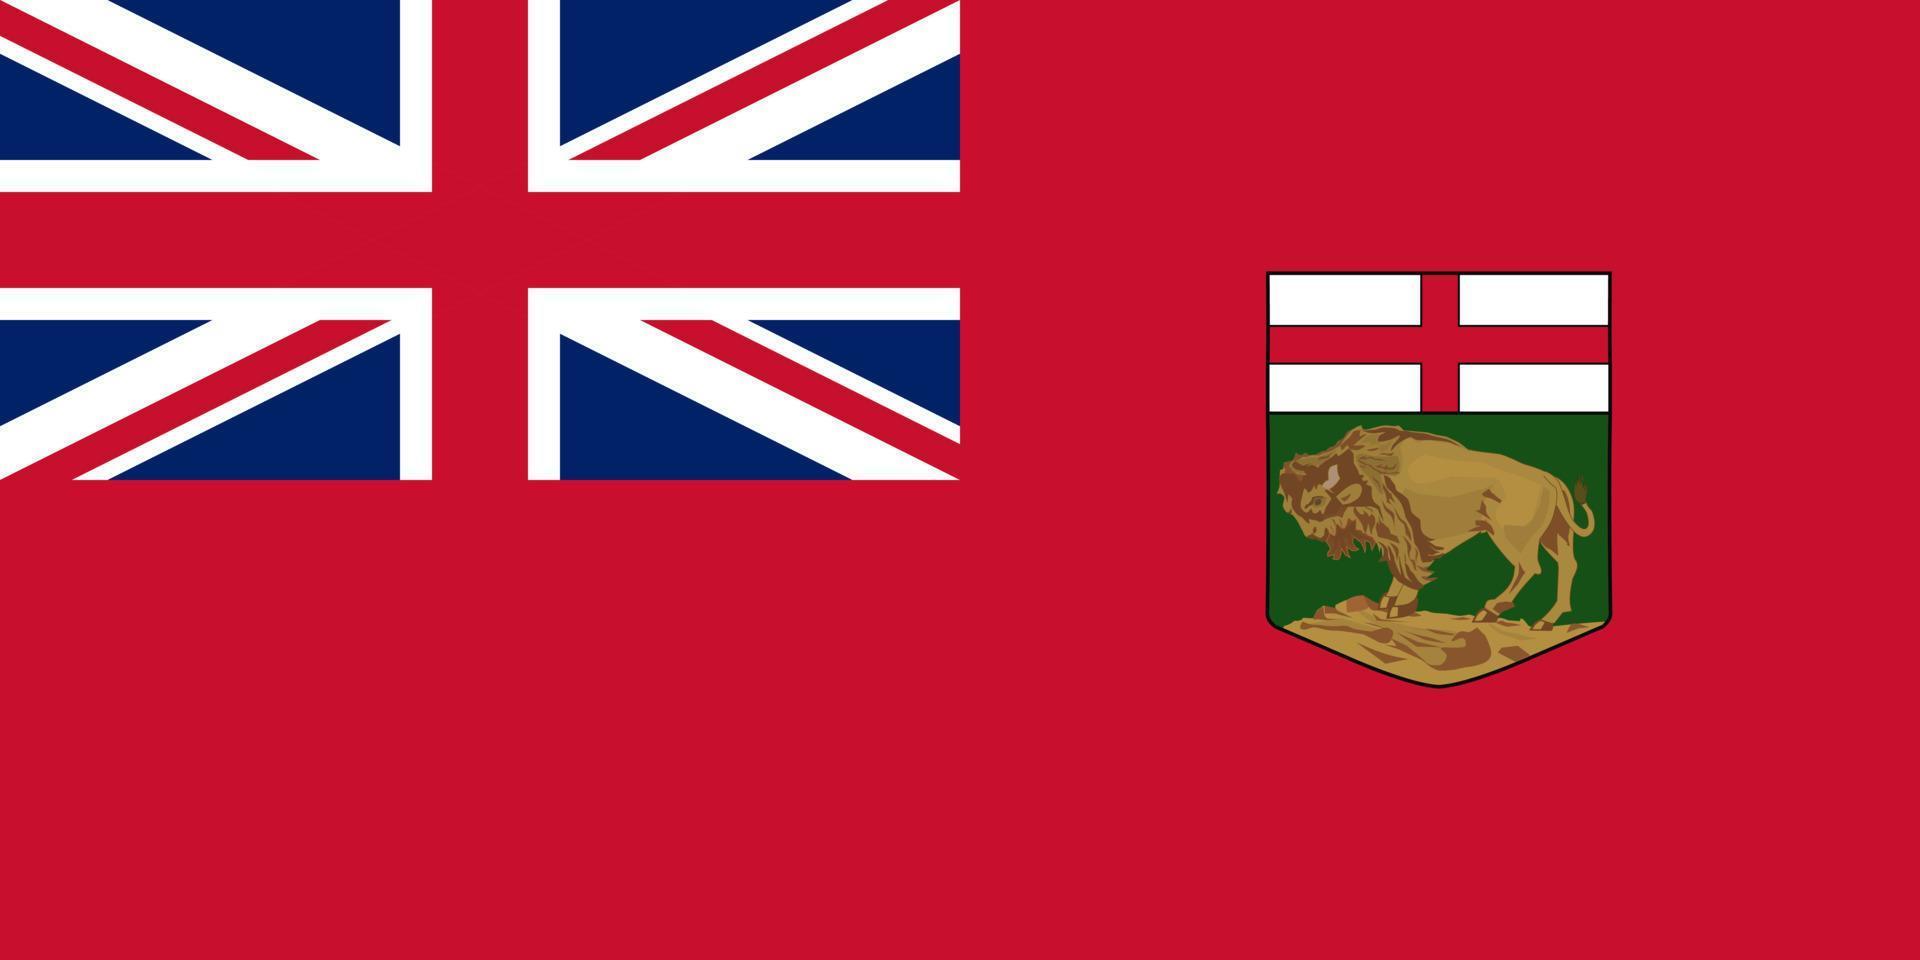 Manitoba flag, province of Canada. Vector illustration.